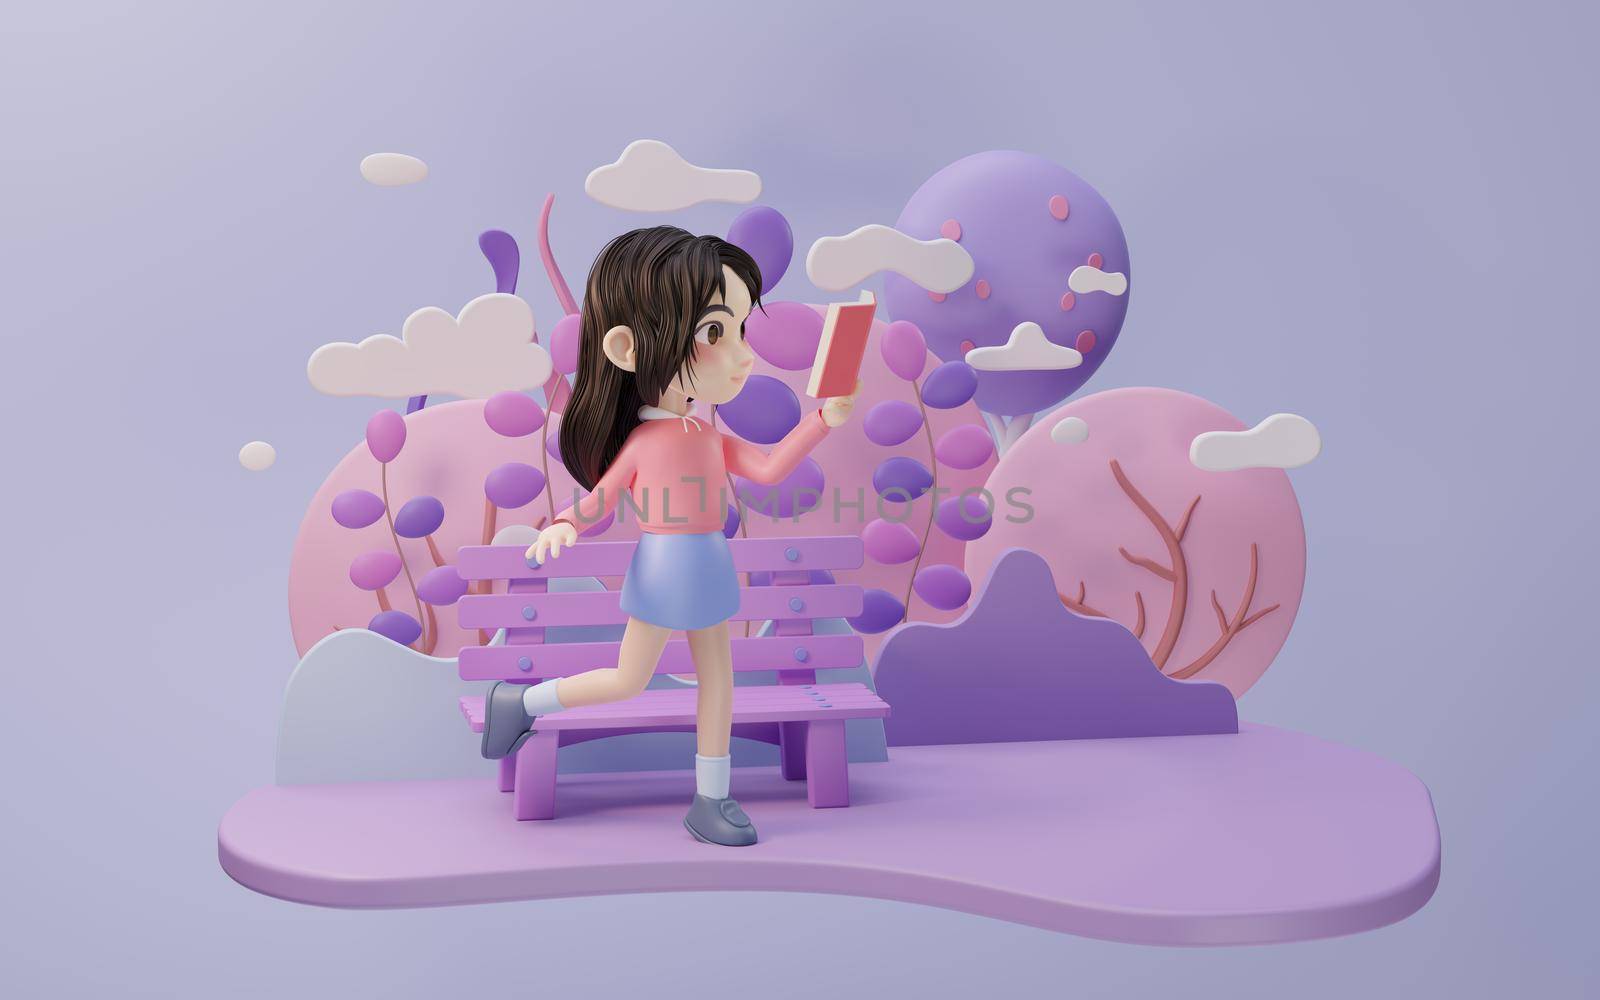 Little girl with cartoon style, 3d rendering. by vinkfan